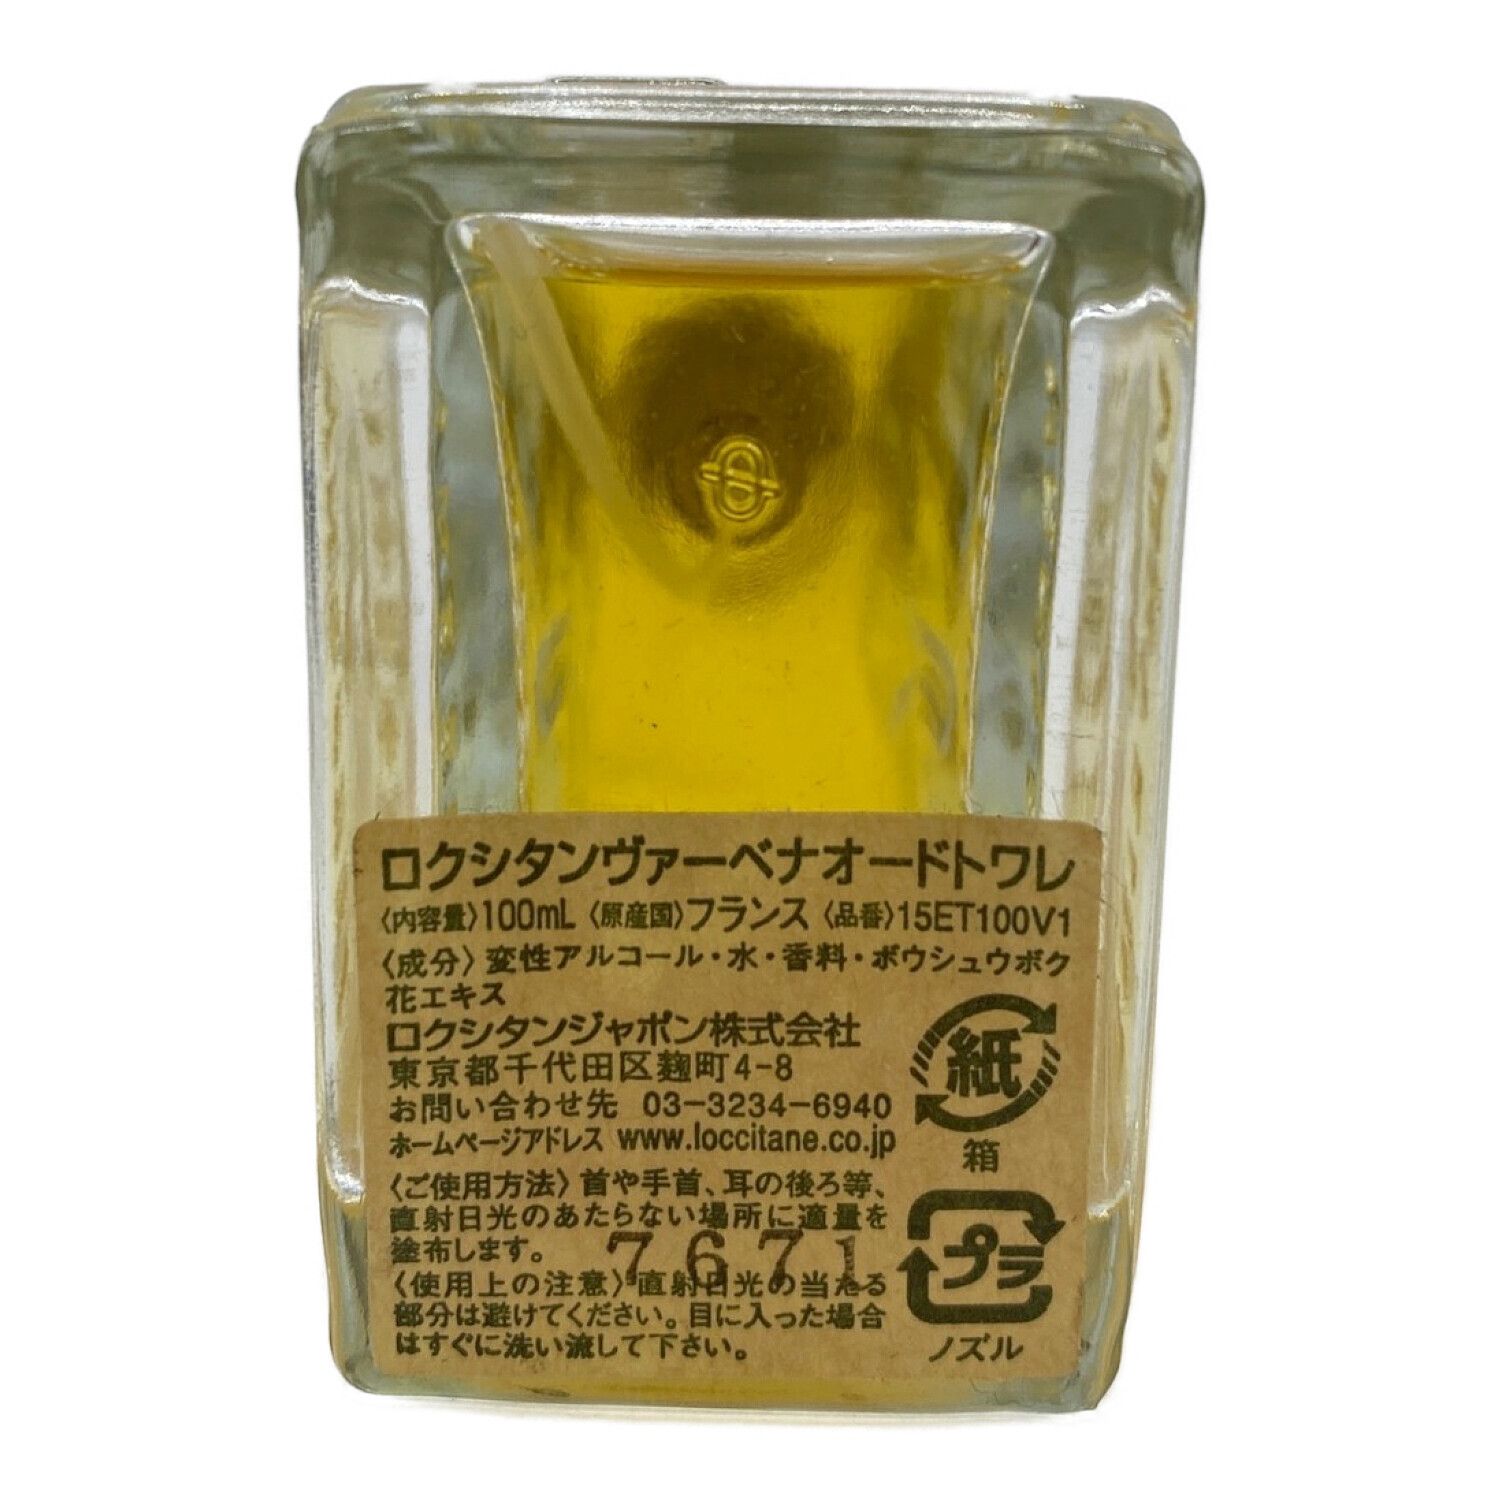 L'OCCITANE (ロクシタン) 香水 ヴァーベナオードトワレ 100ml